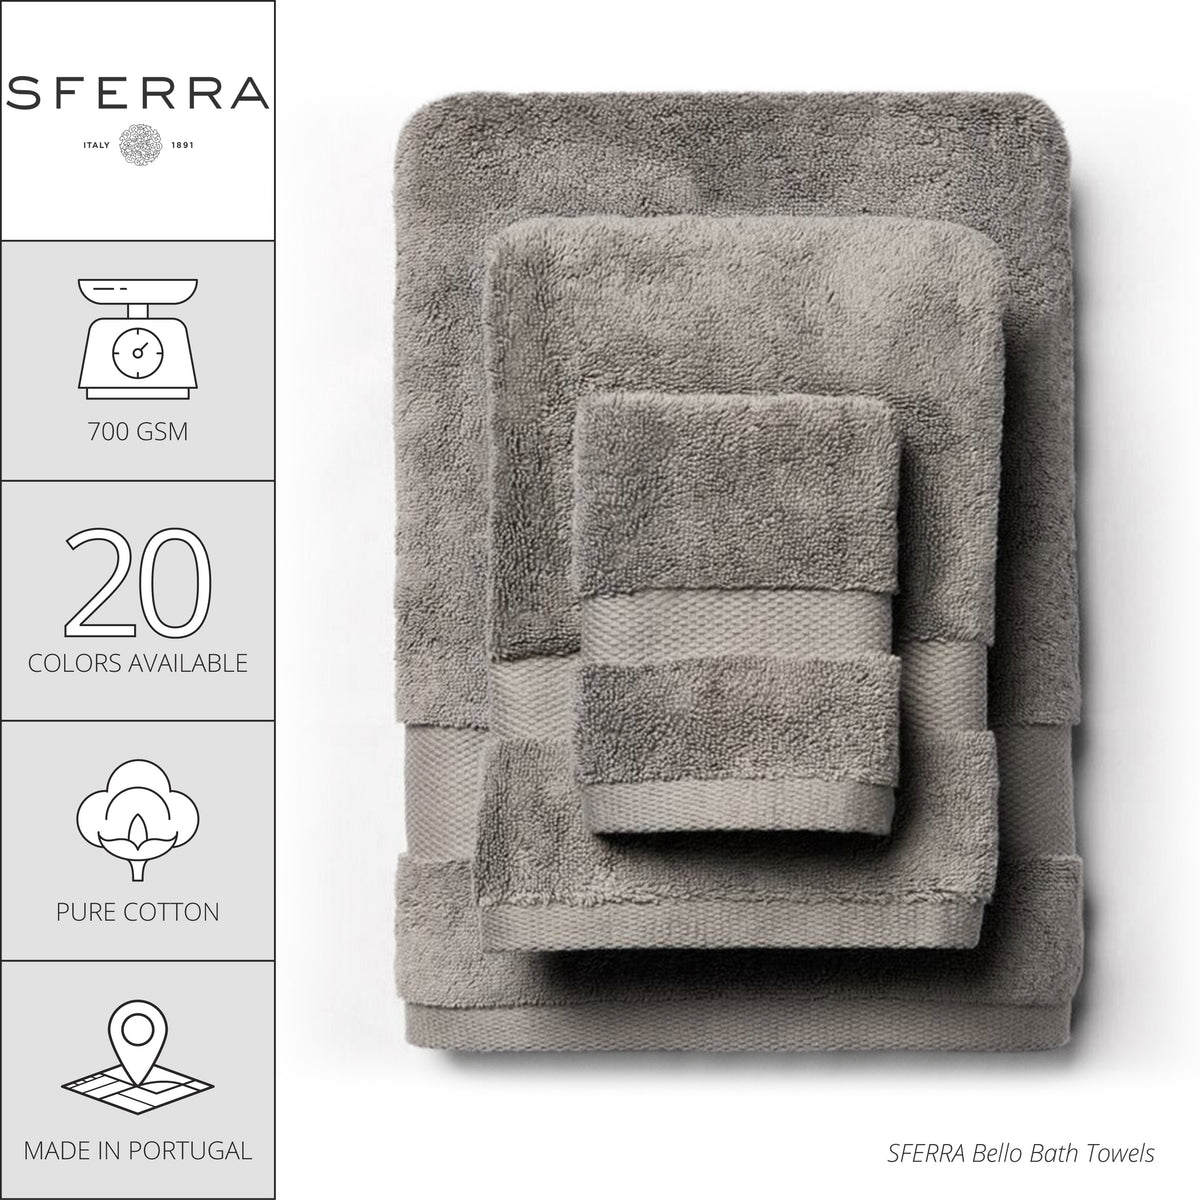 Sferra Bello Bath Towels and Mats - Stone